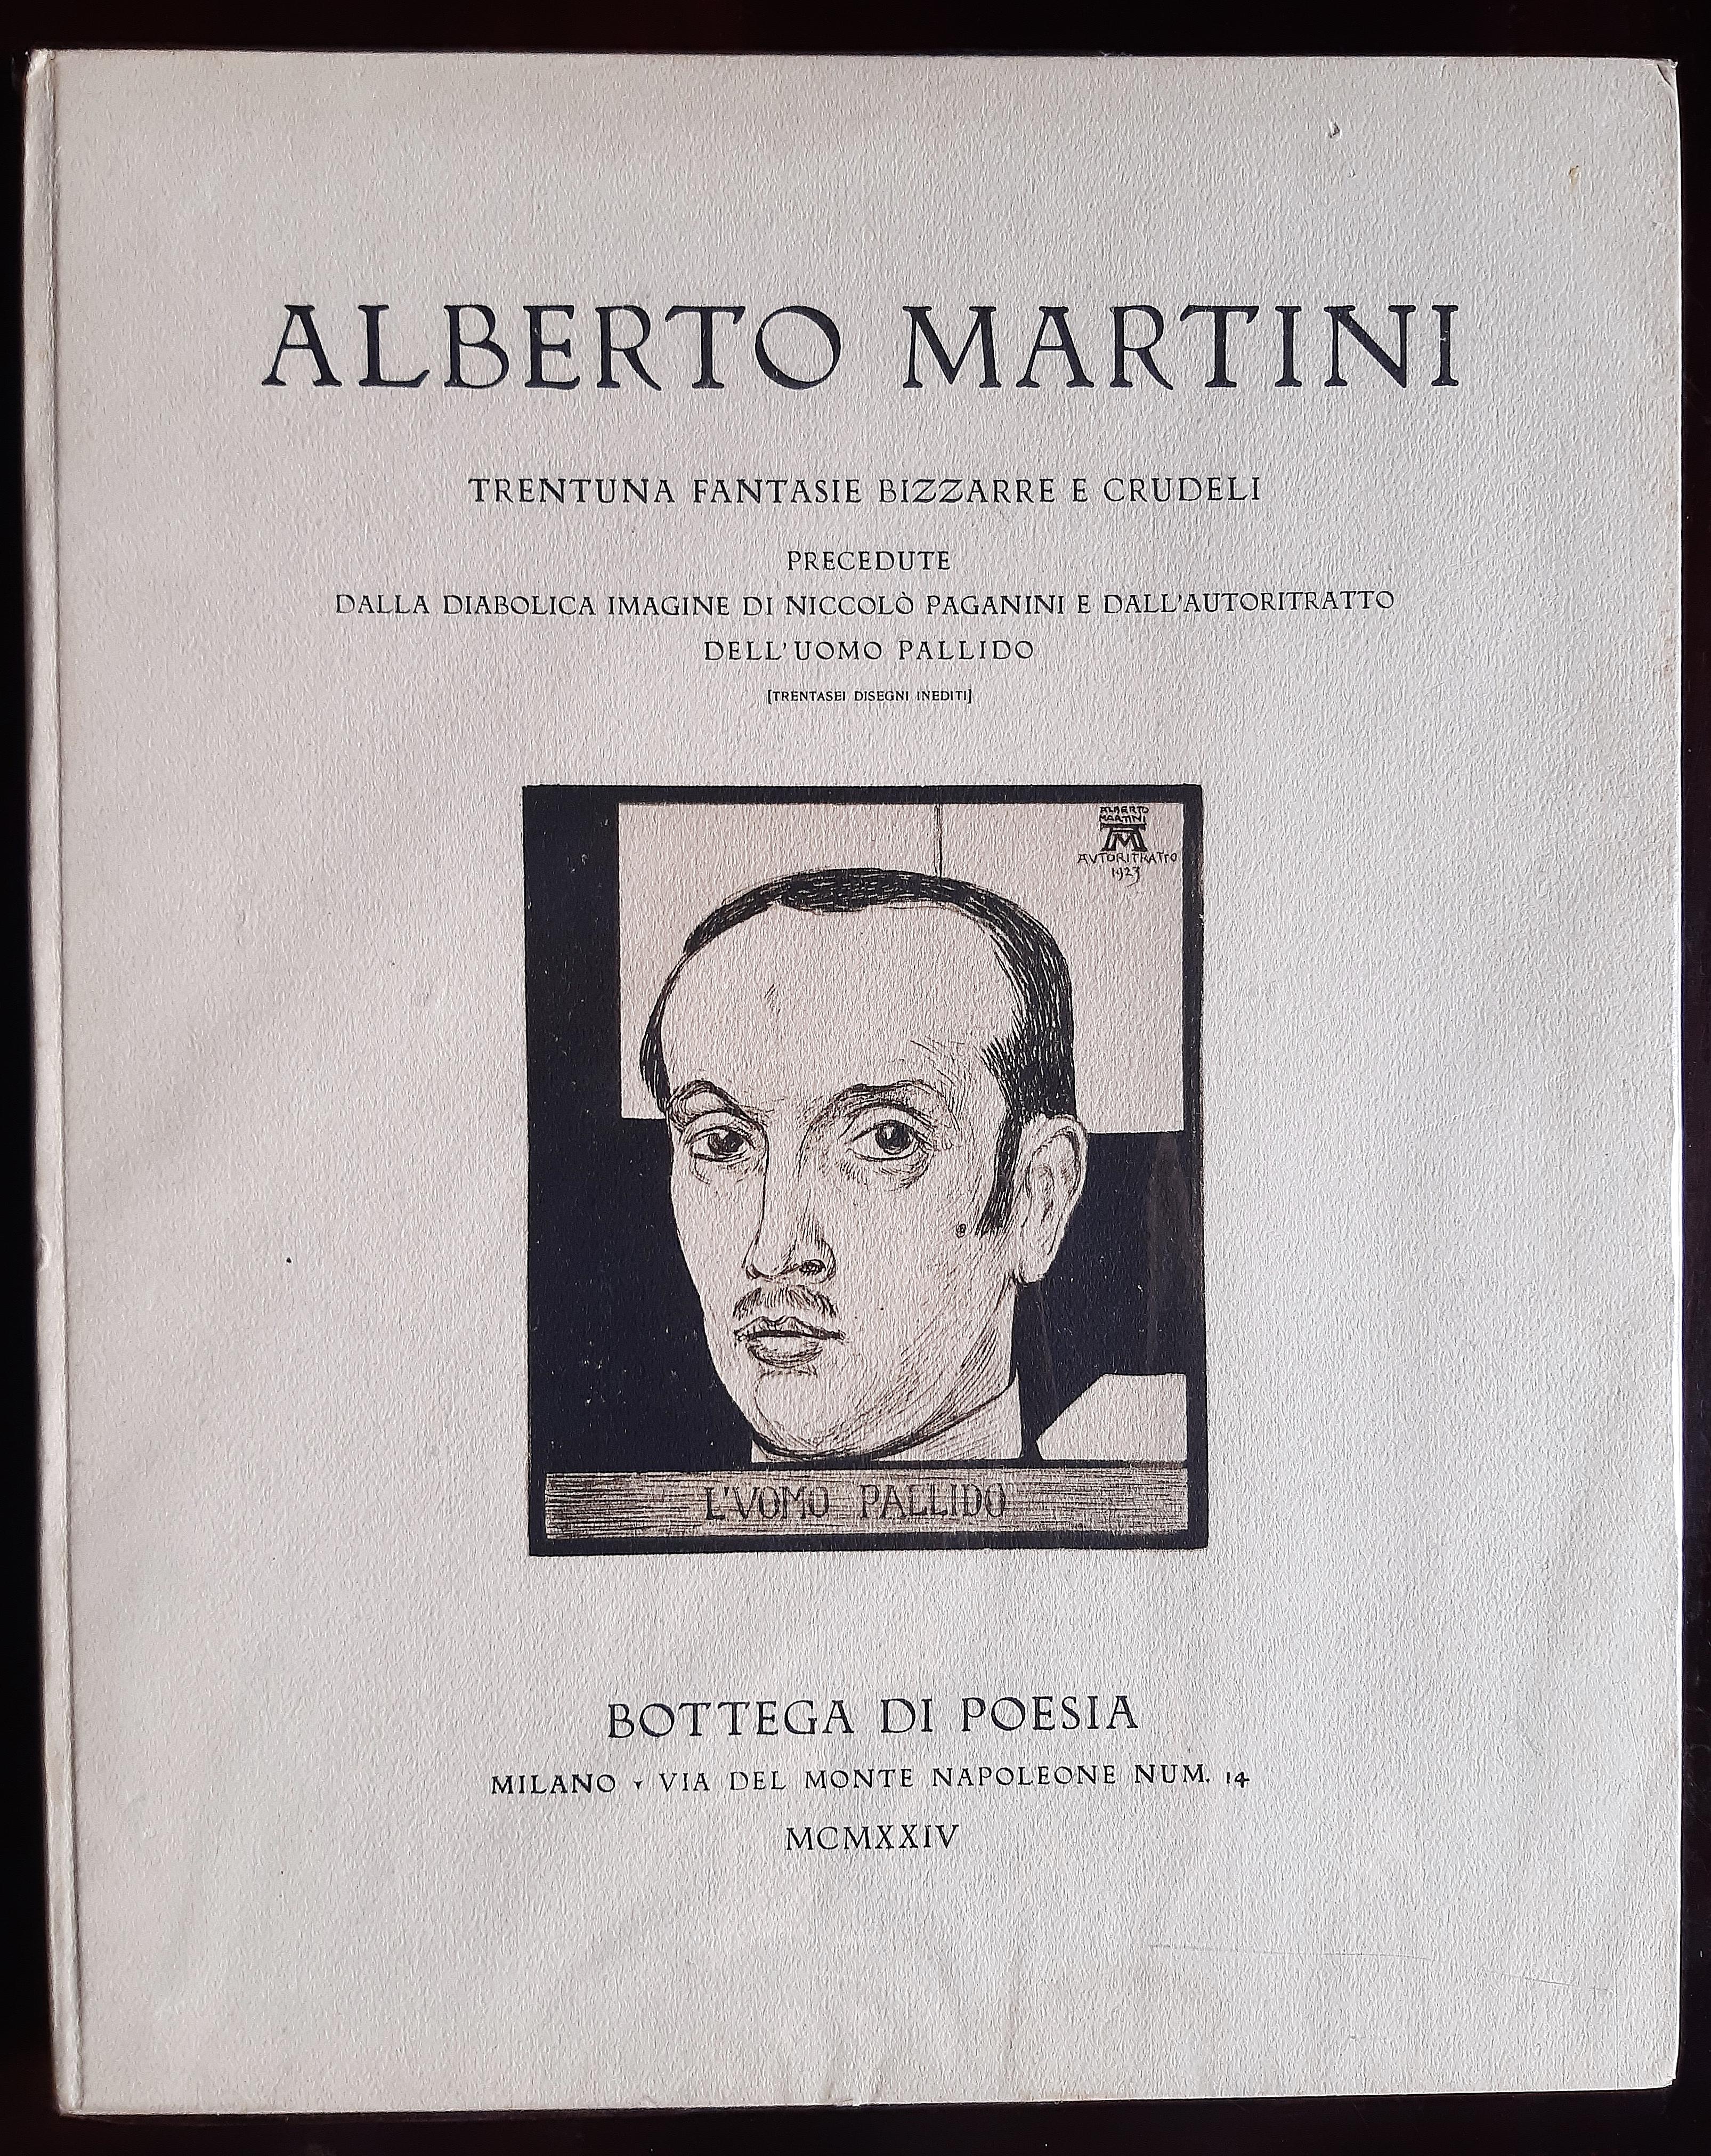 Trentuna fantasie - Rare Book Illustrated by Alberto Martini - 1924